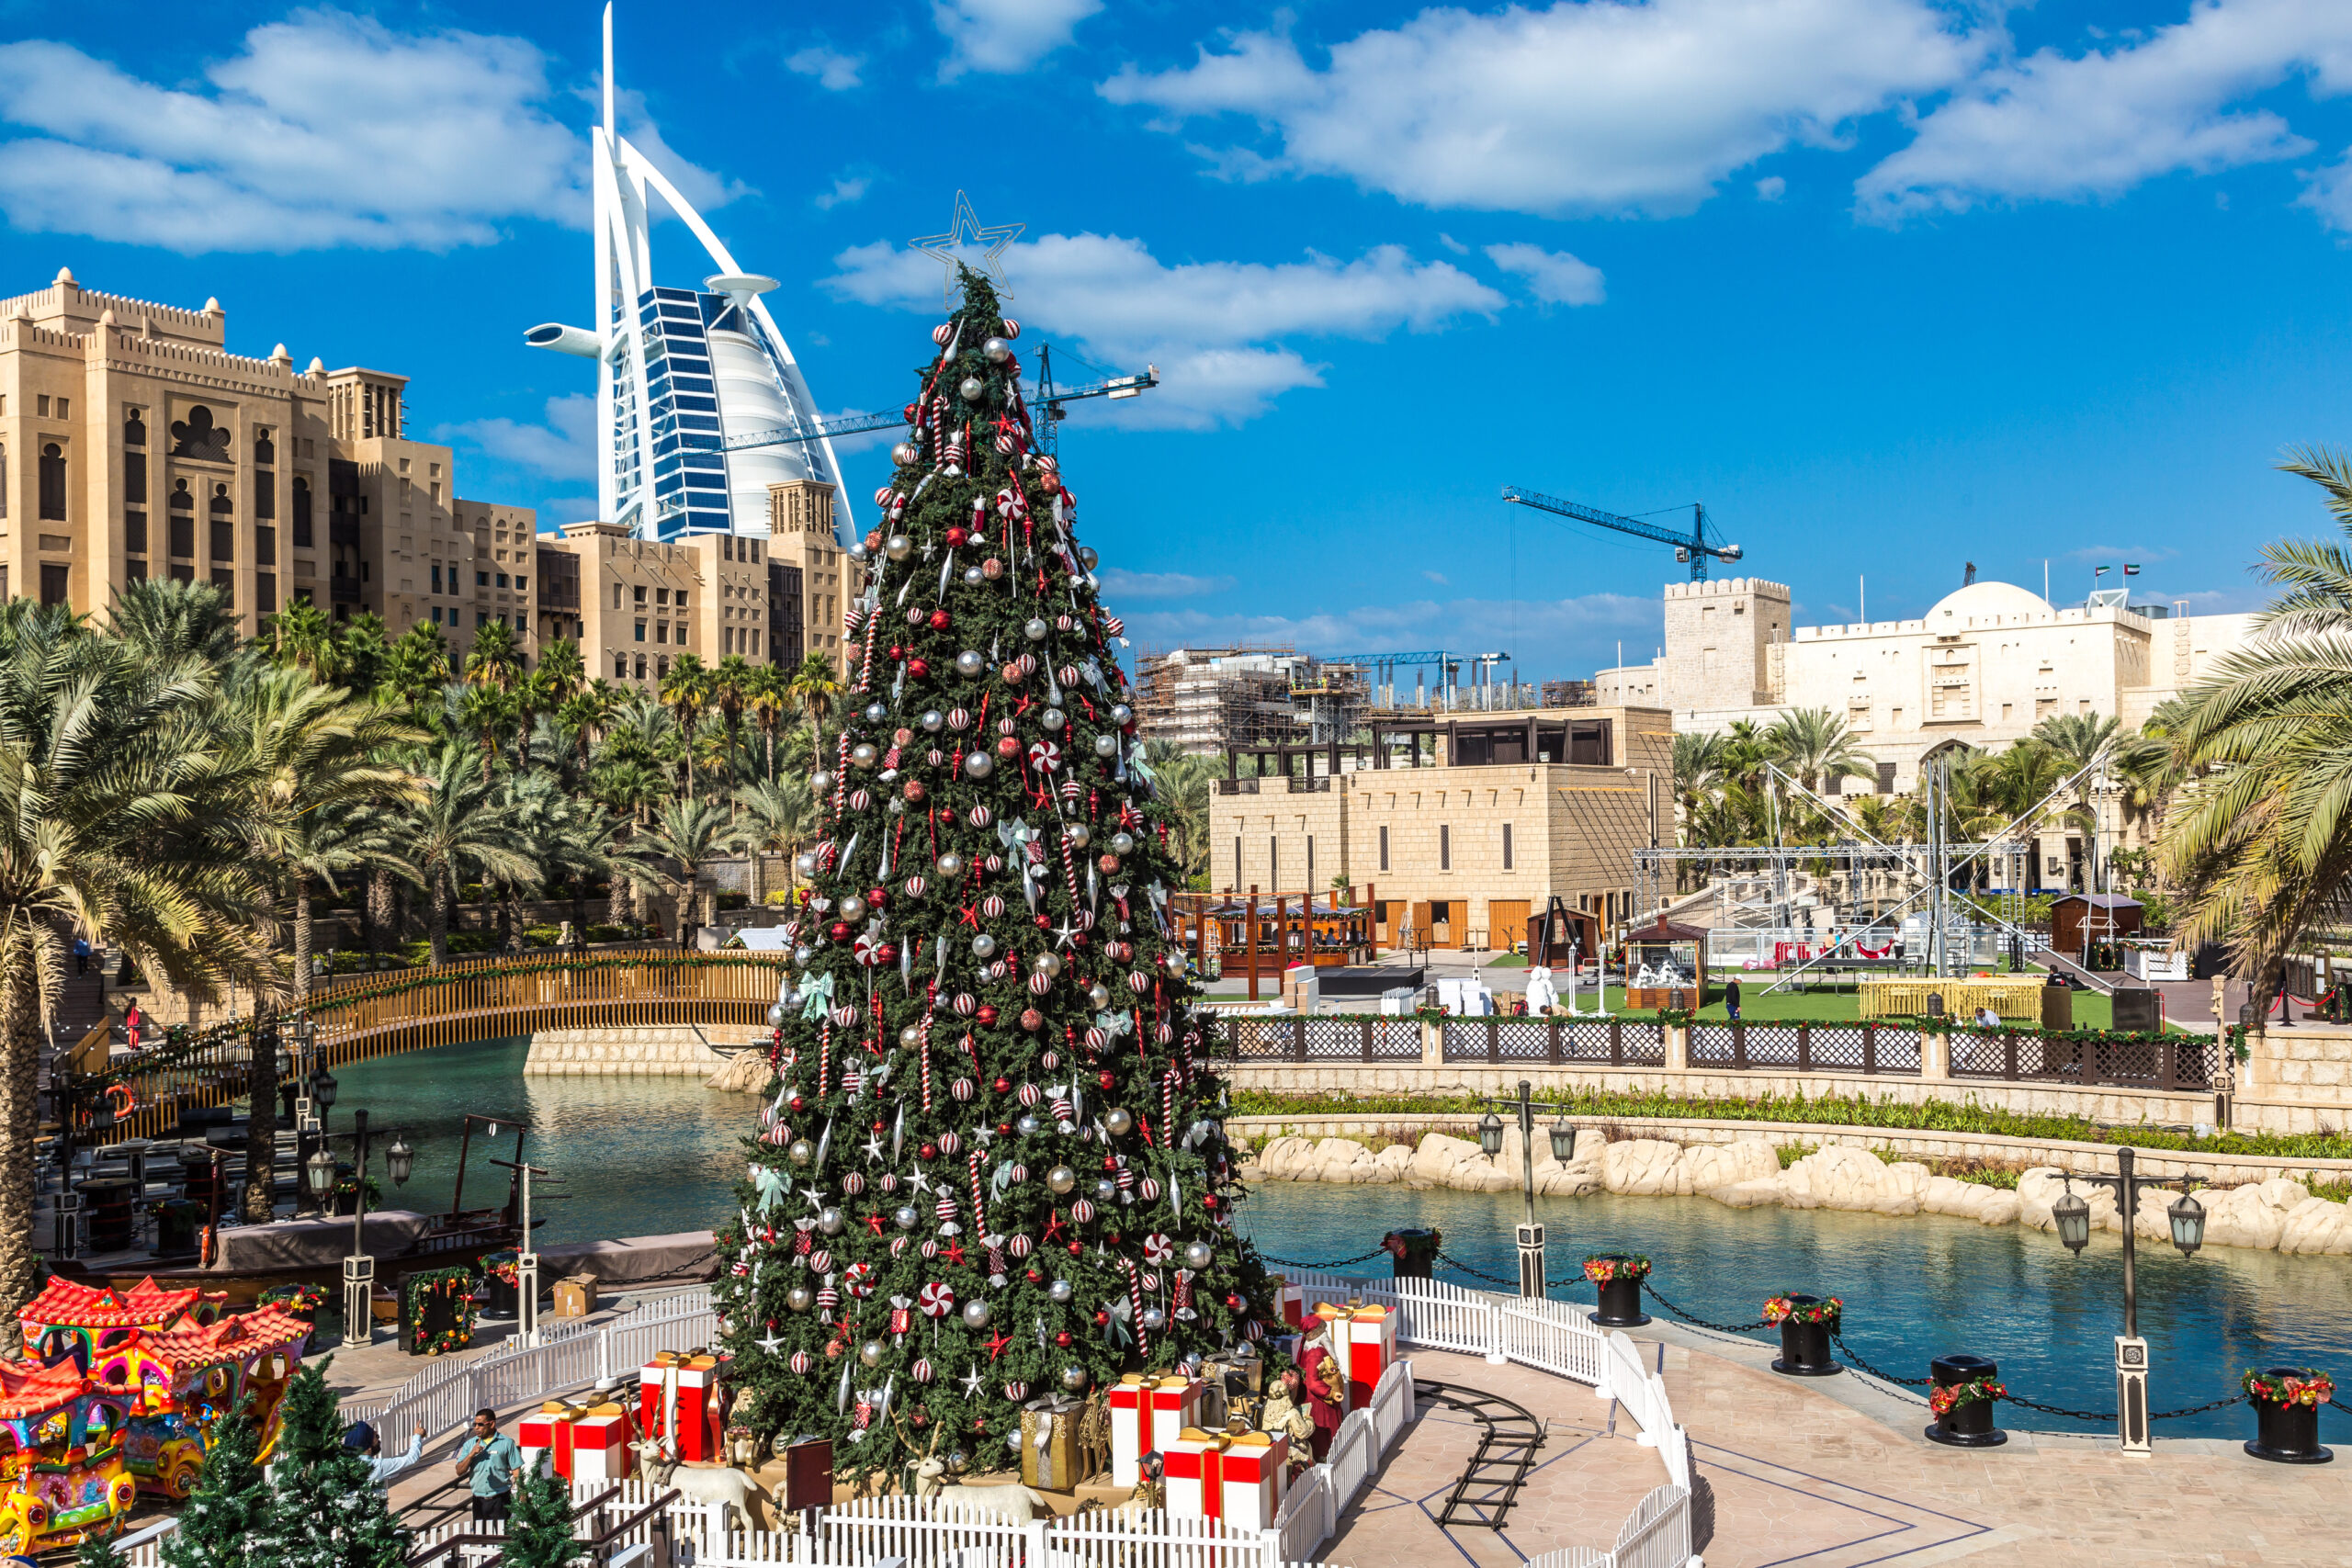 Festive season spots to visit in Dubai